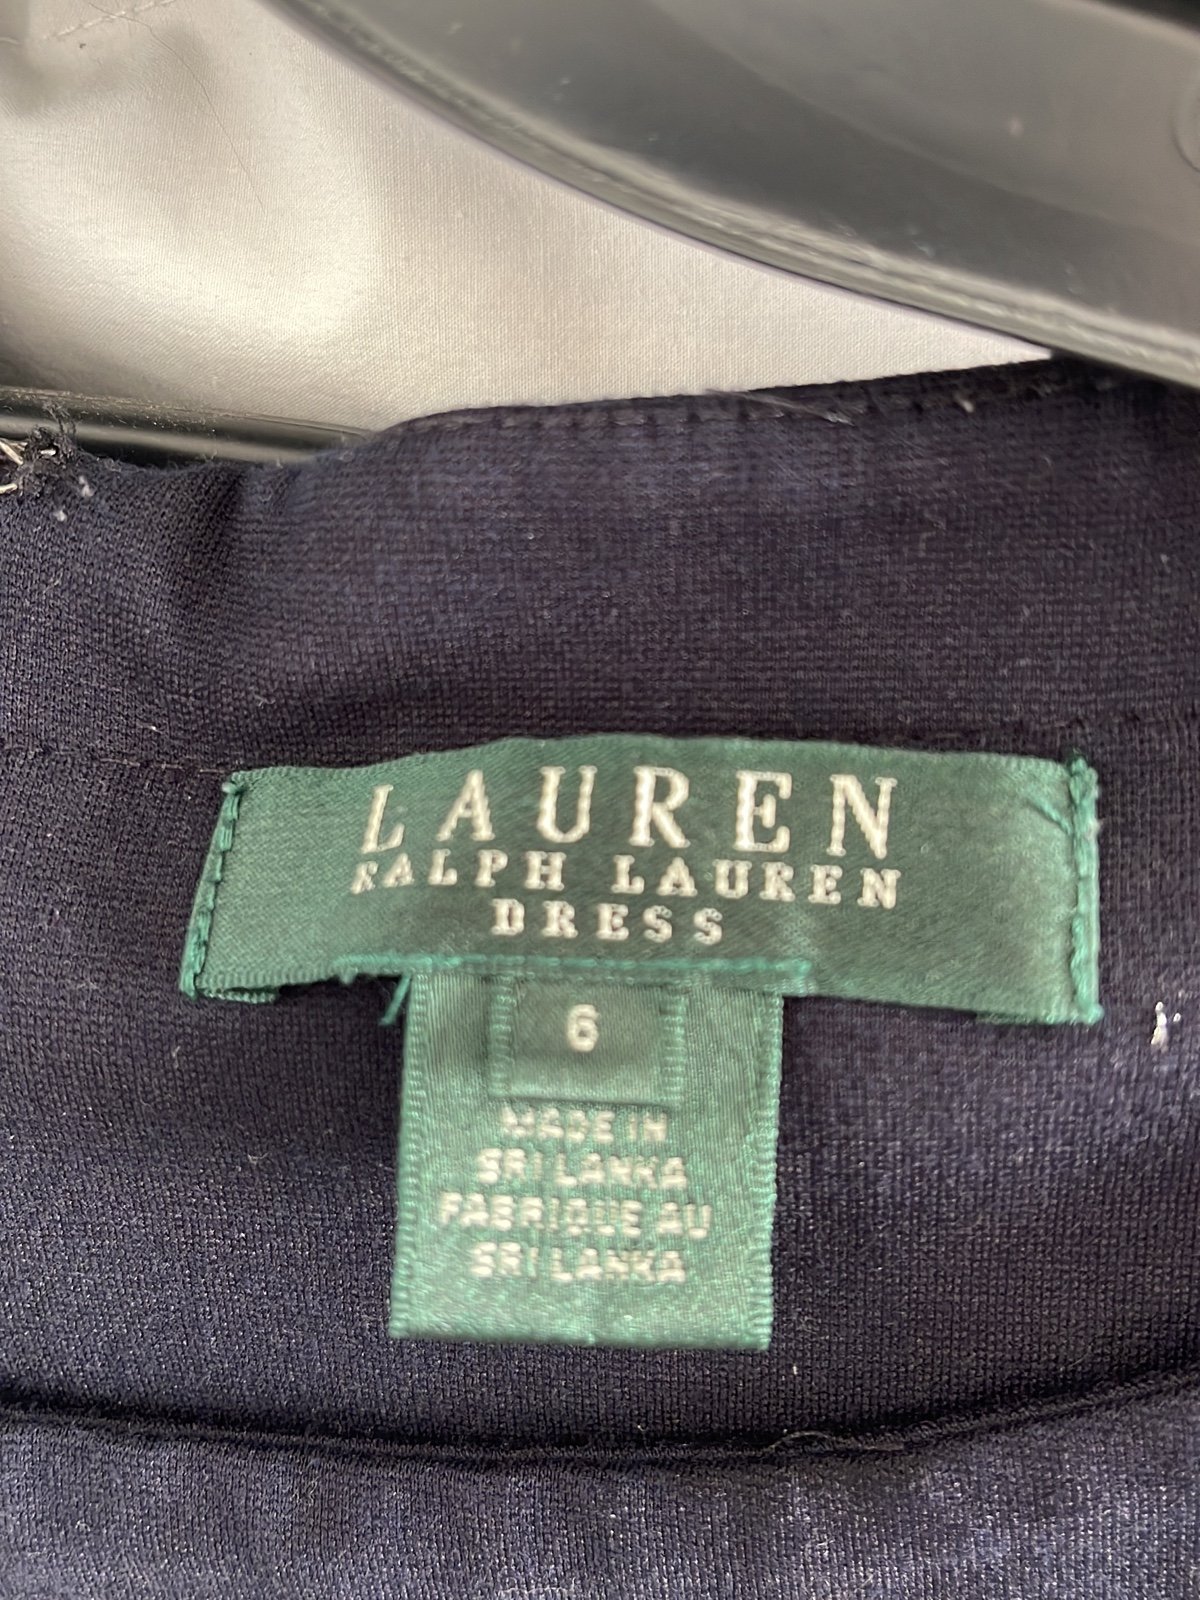 large selection Ralph Lauren dress size 6 OIHDYZjFc New Style